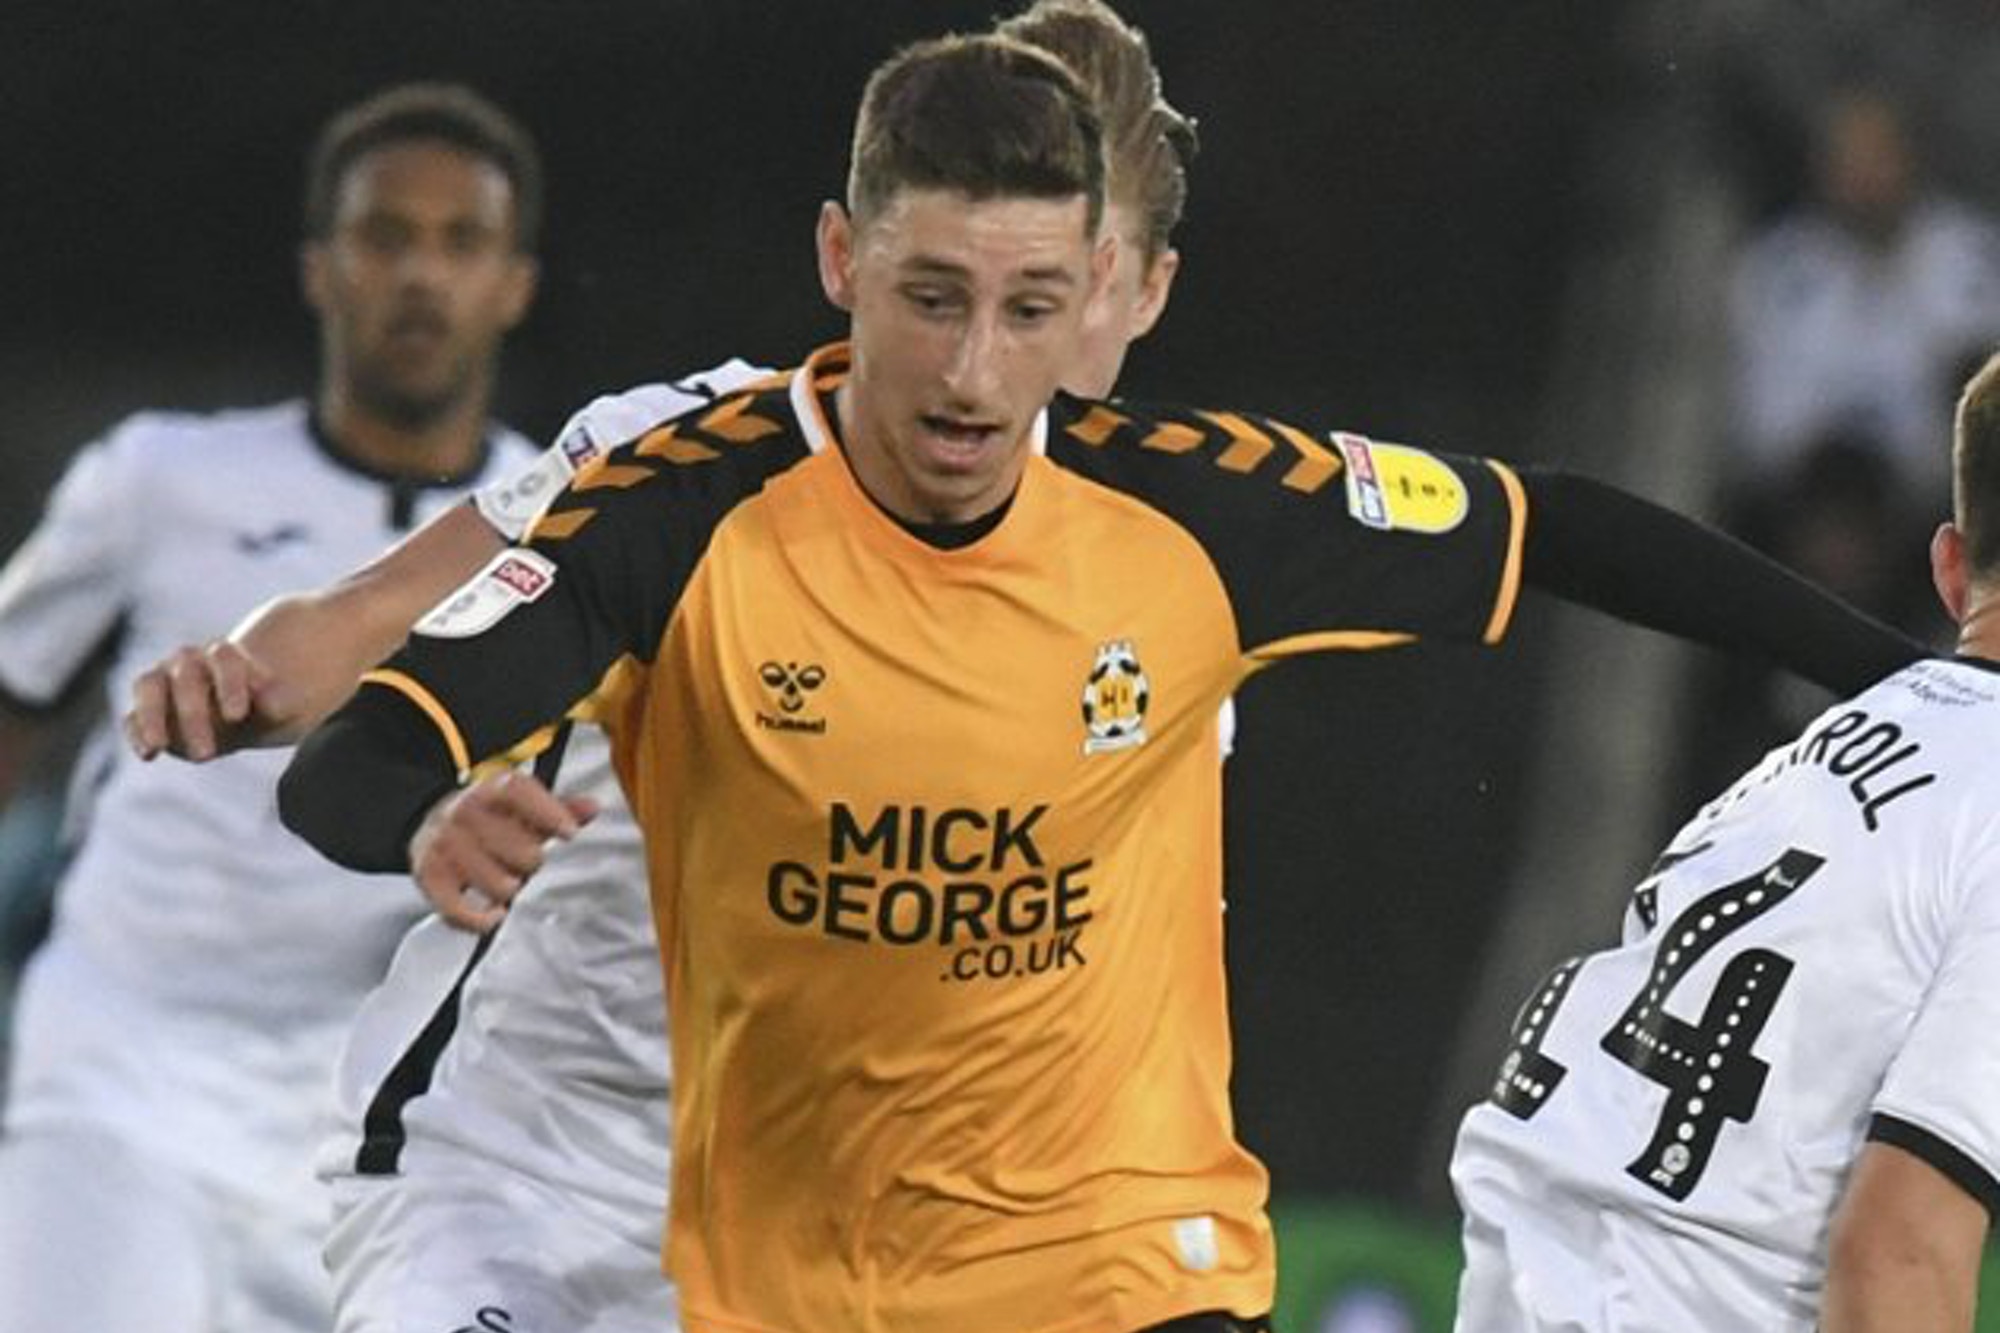 Tottenham-ING empresta jovem meia cipriota ao Burton Albion-ING